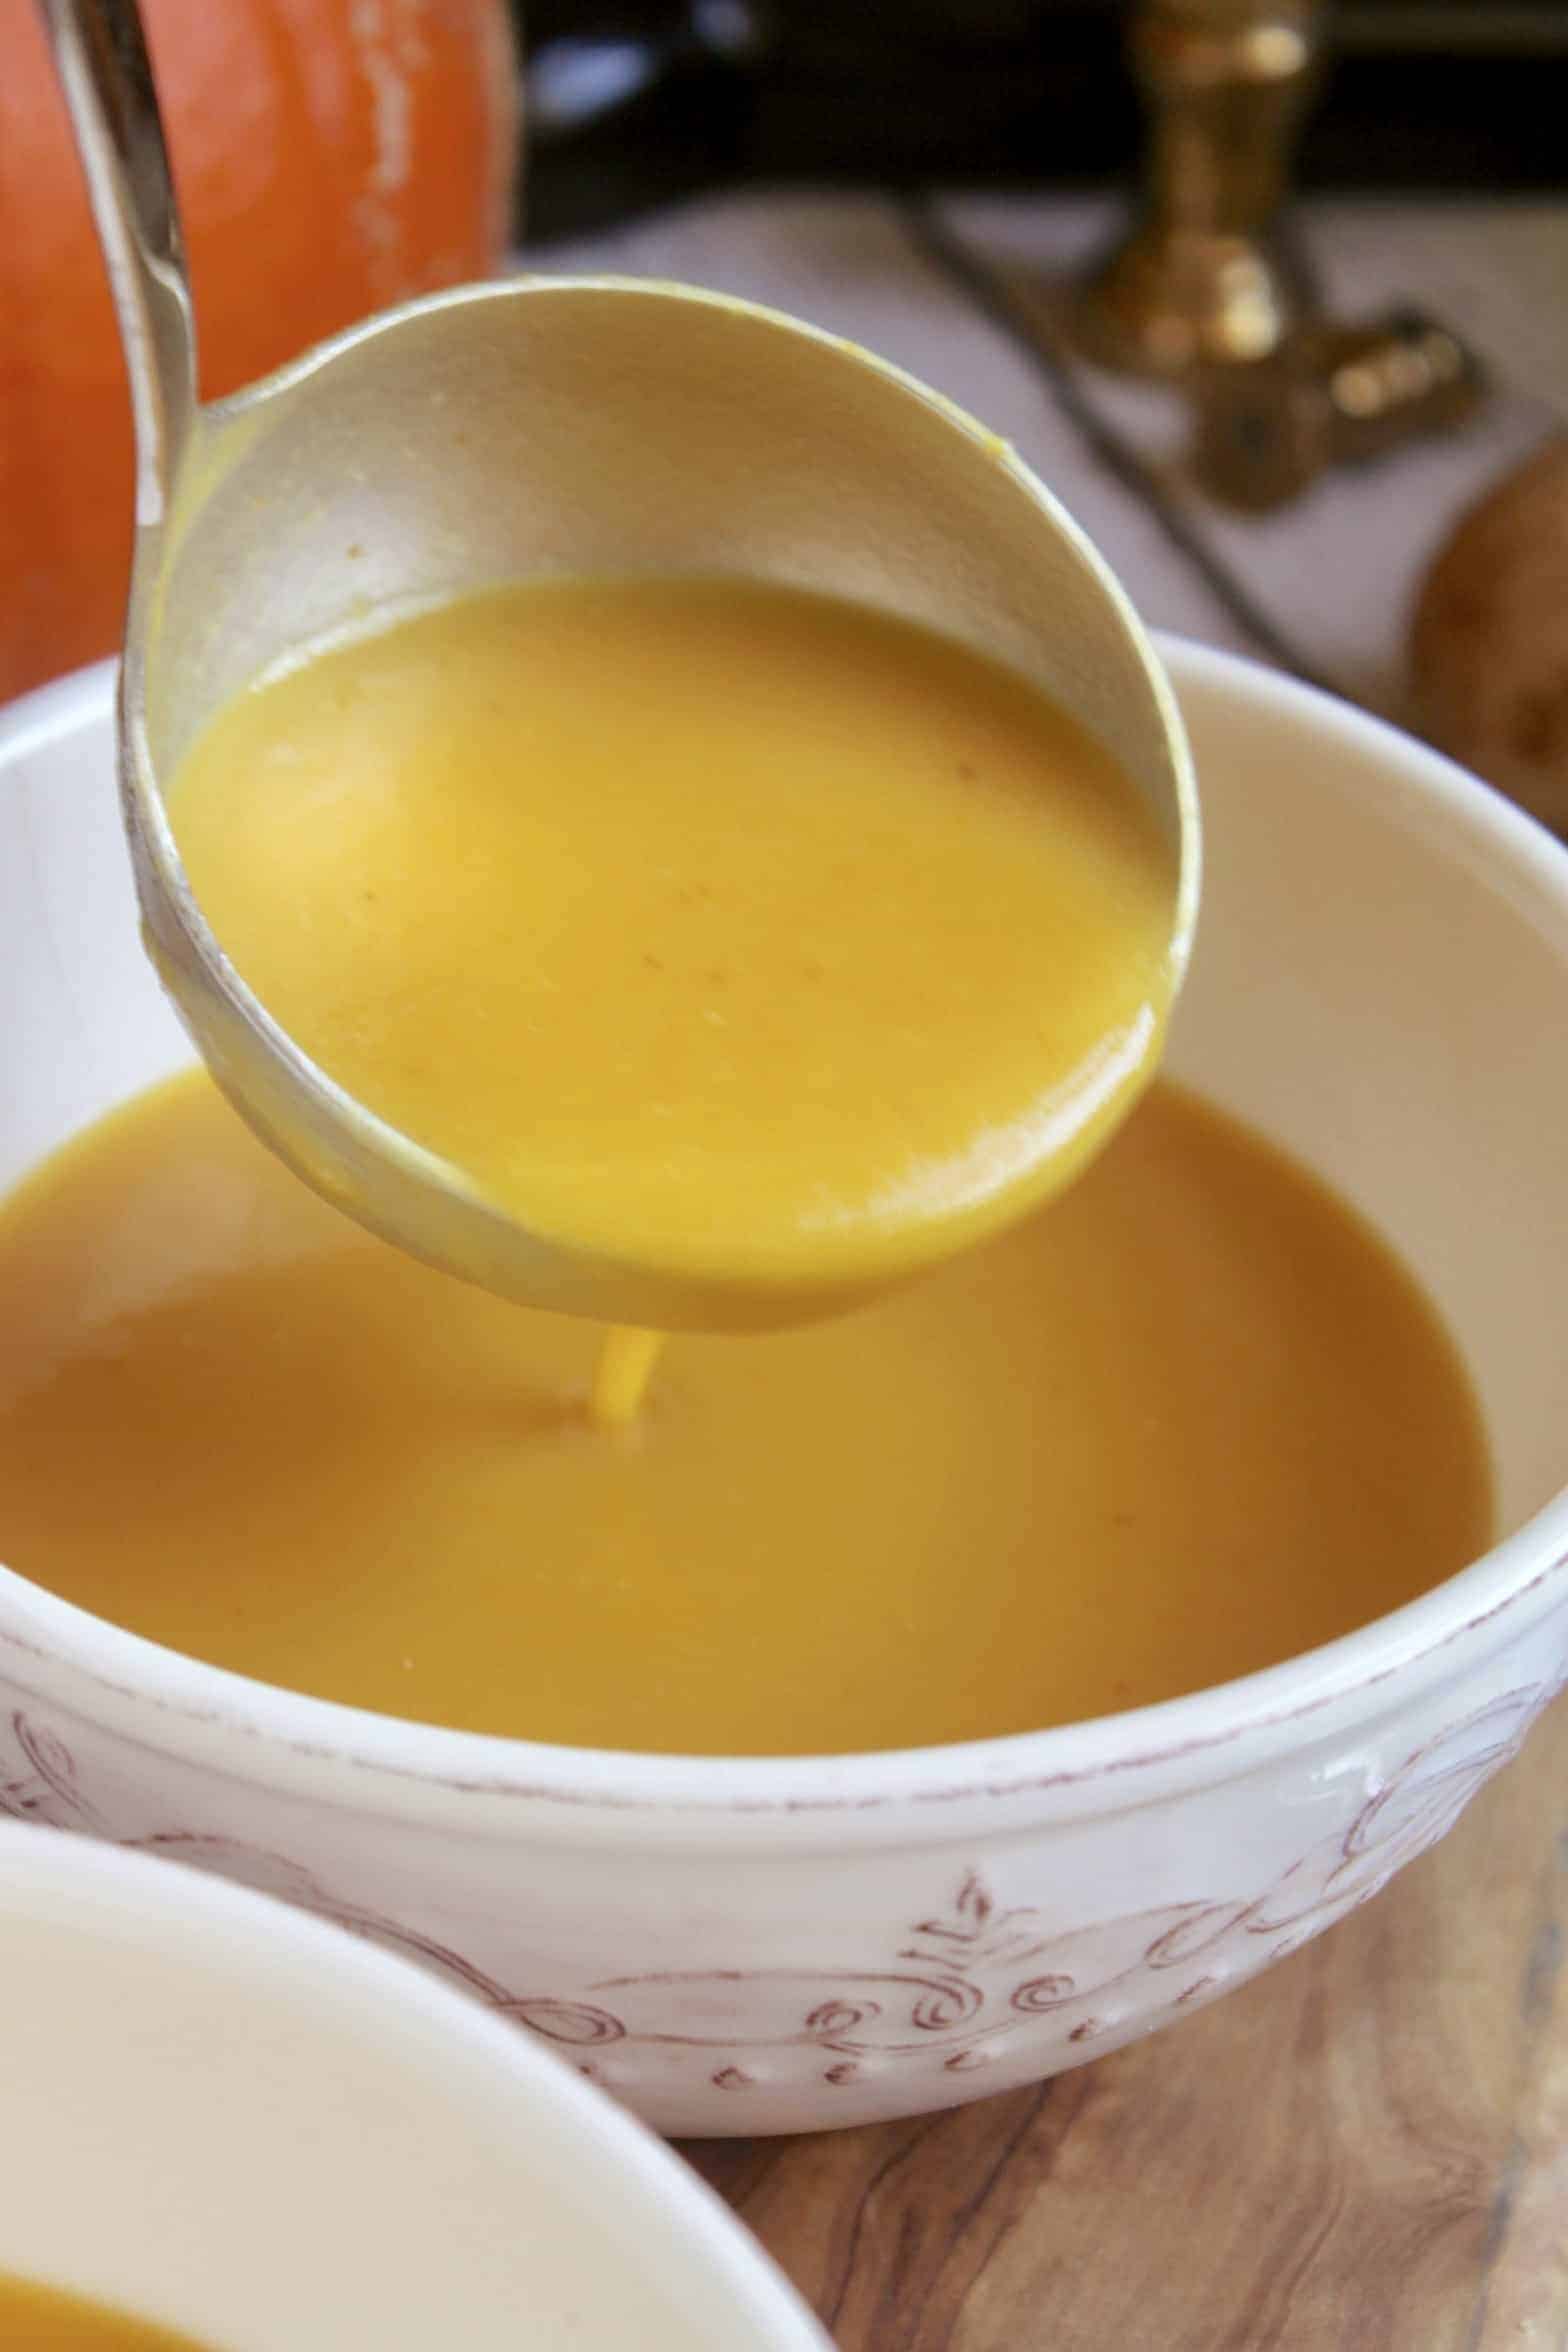 ladling soup